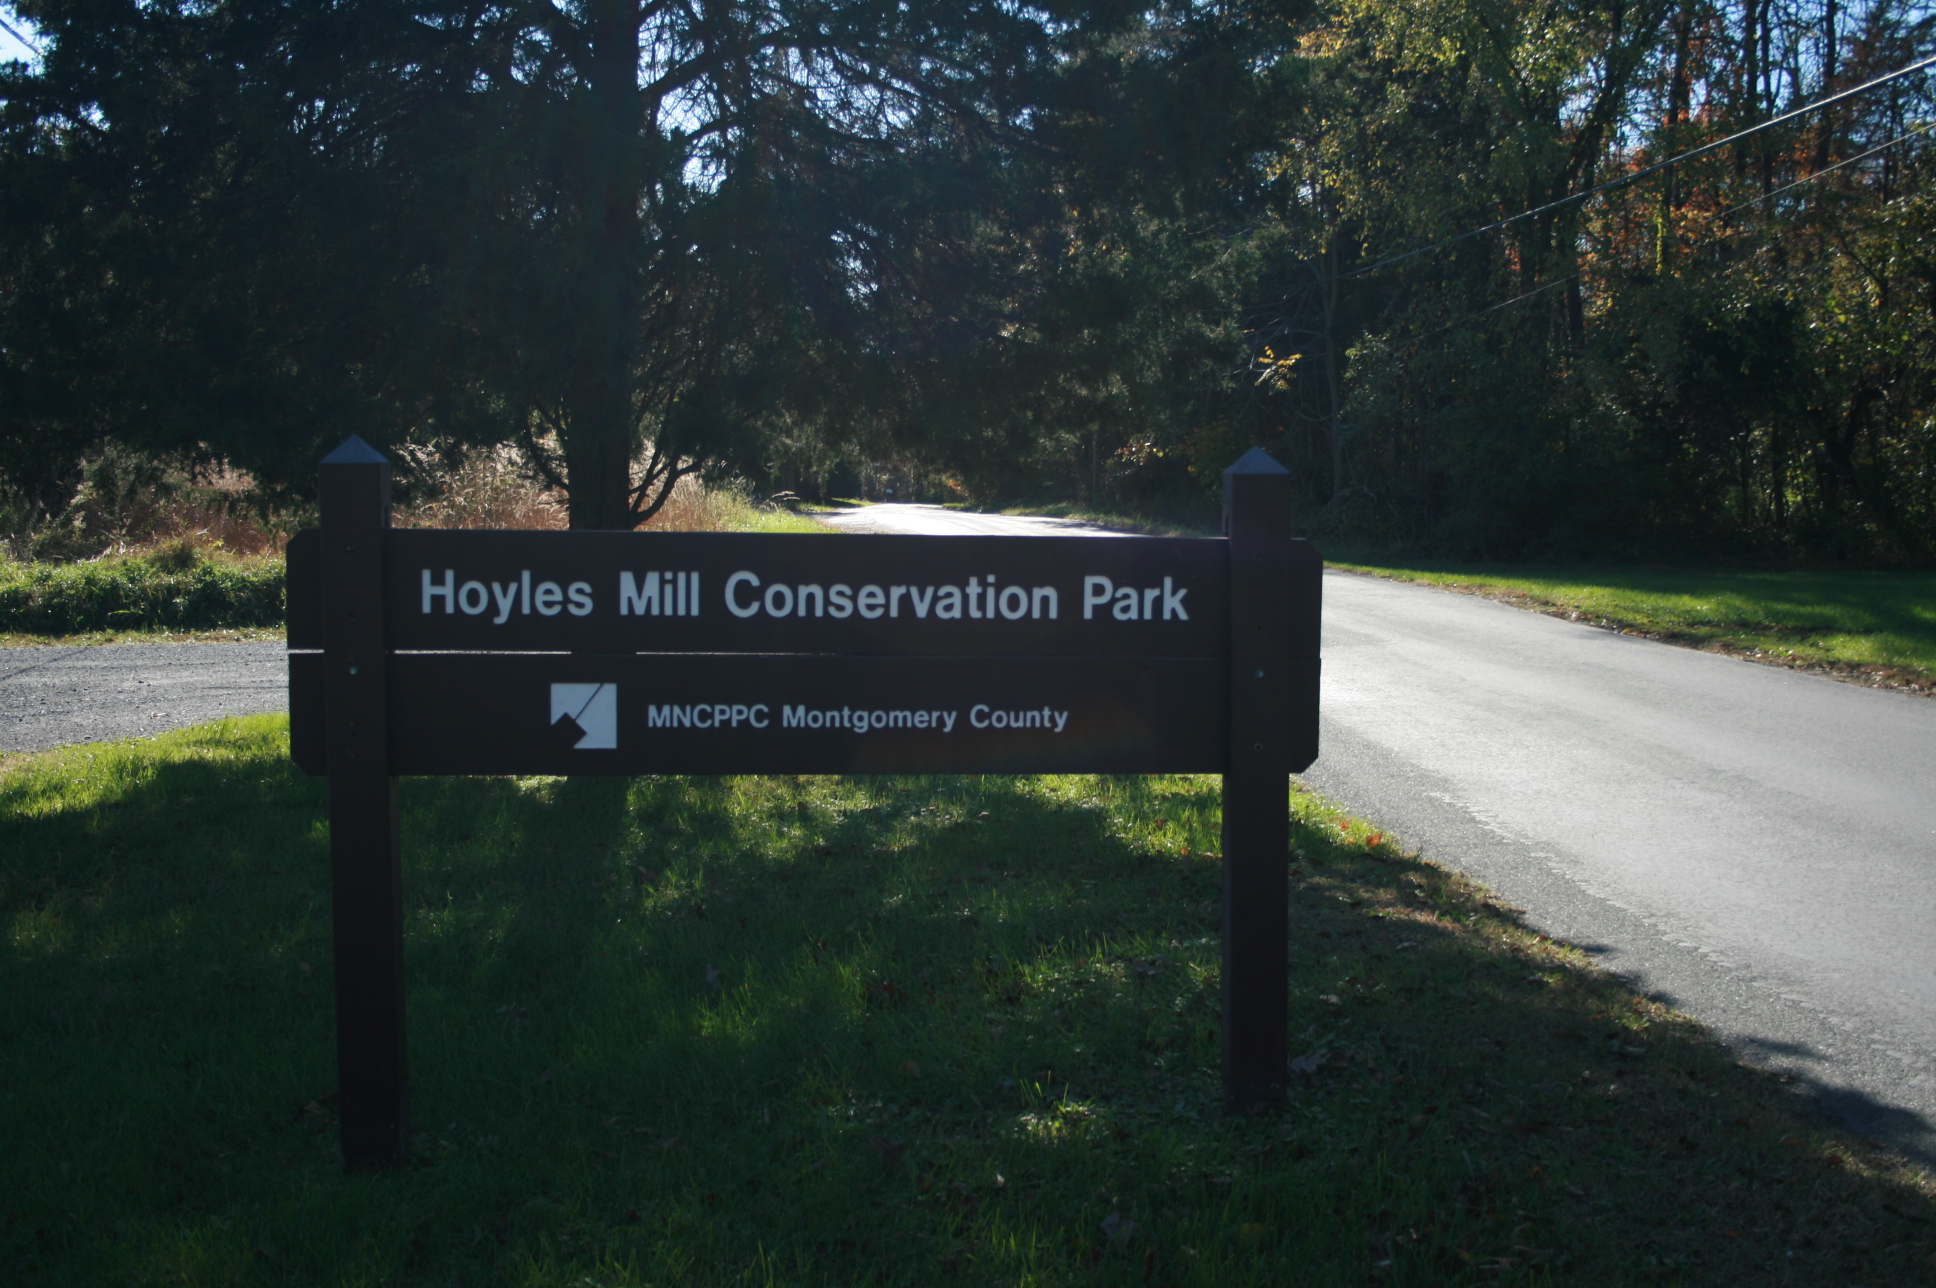 Hoyles Mill Conservation Park sign